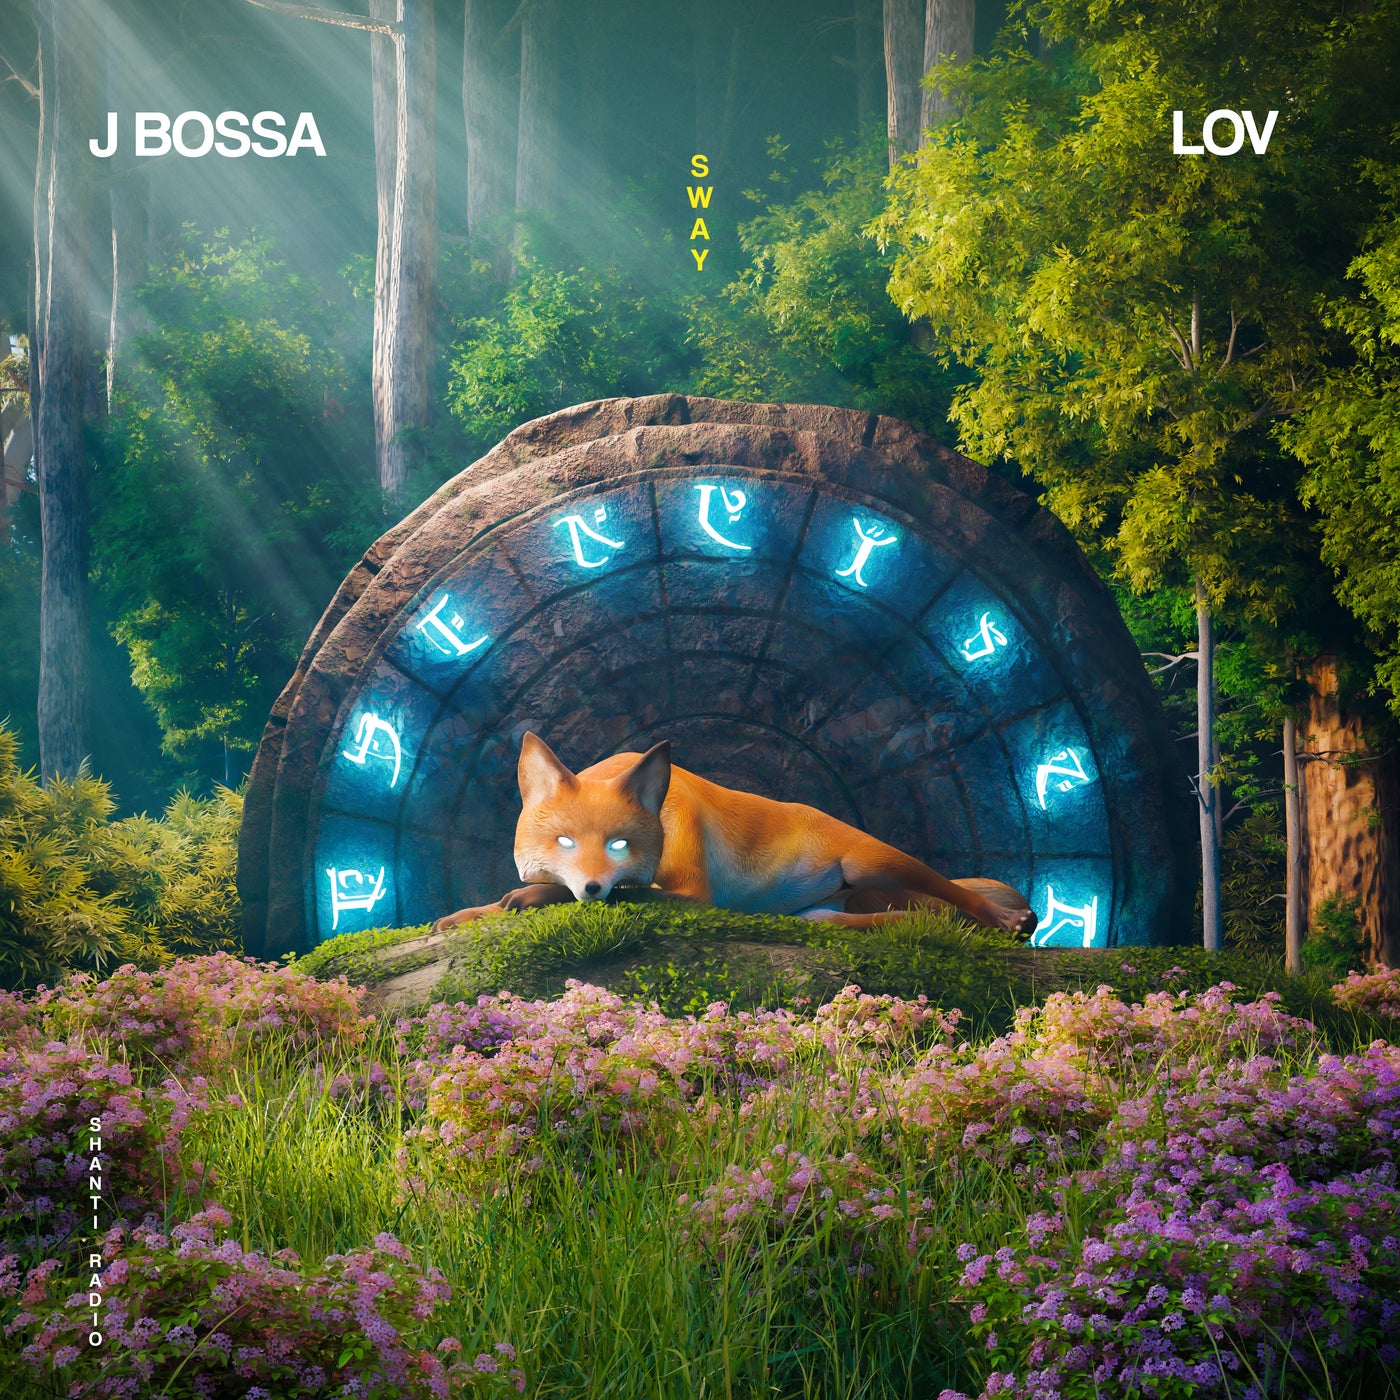 Lov, J Bossa - Sway (amonita Extended Remix) on Revolution Radio